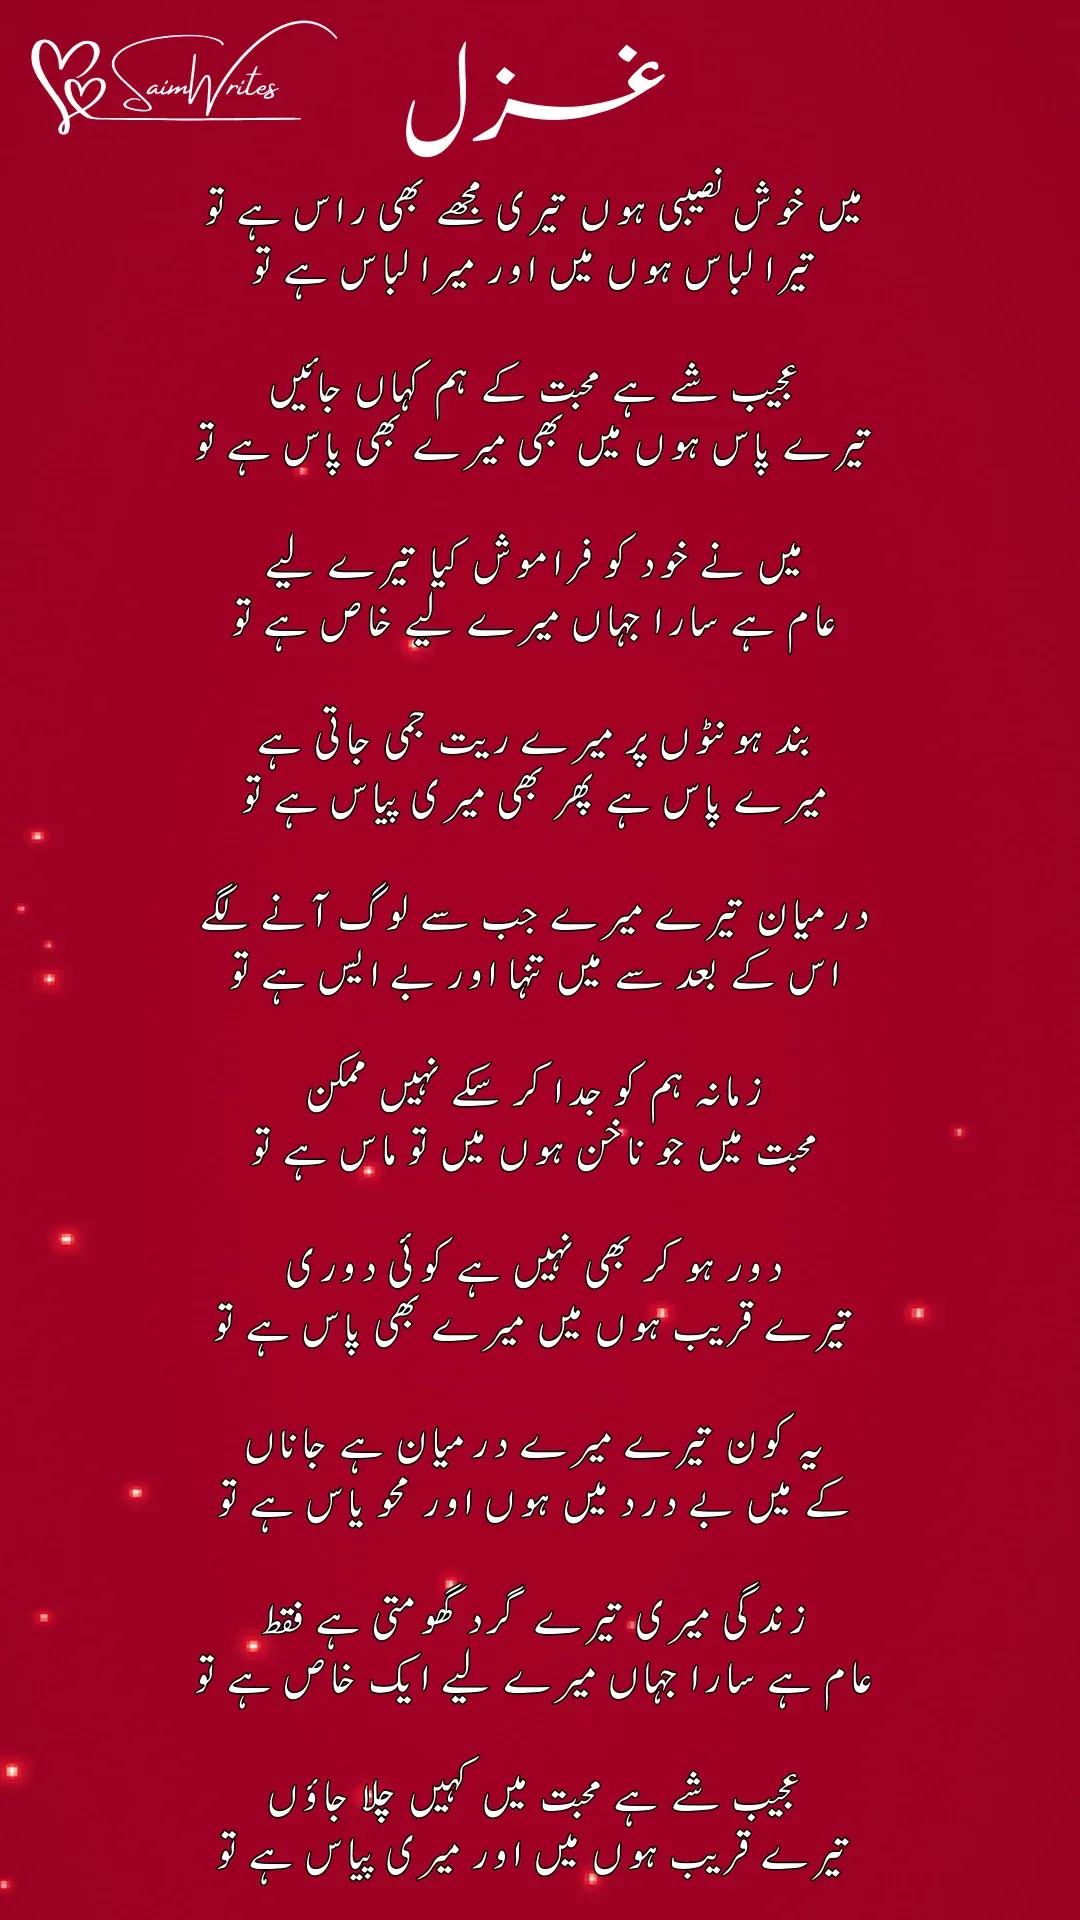 Urdu Ghazal by wasi shah | Mein khush naseebi hon teri - SaimWrites